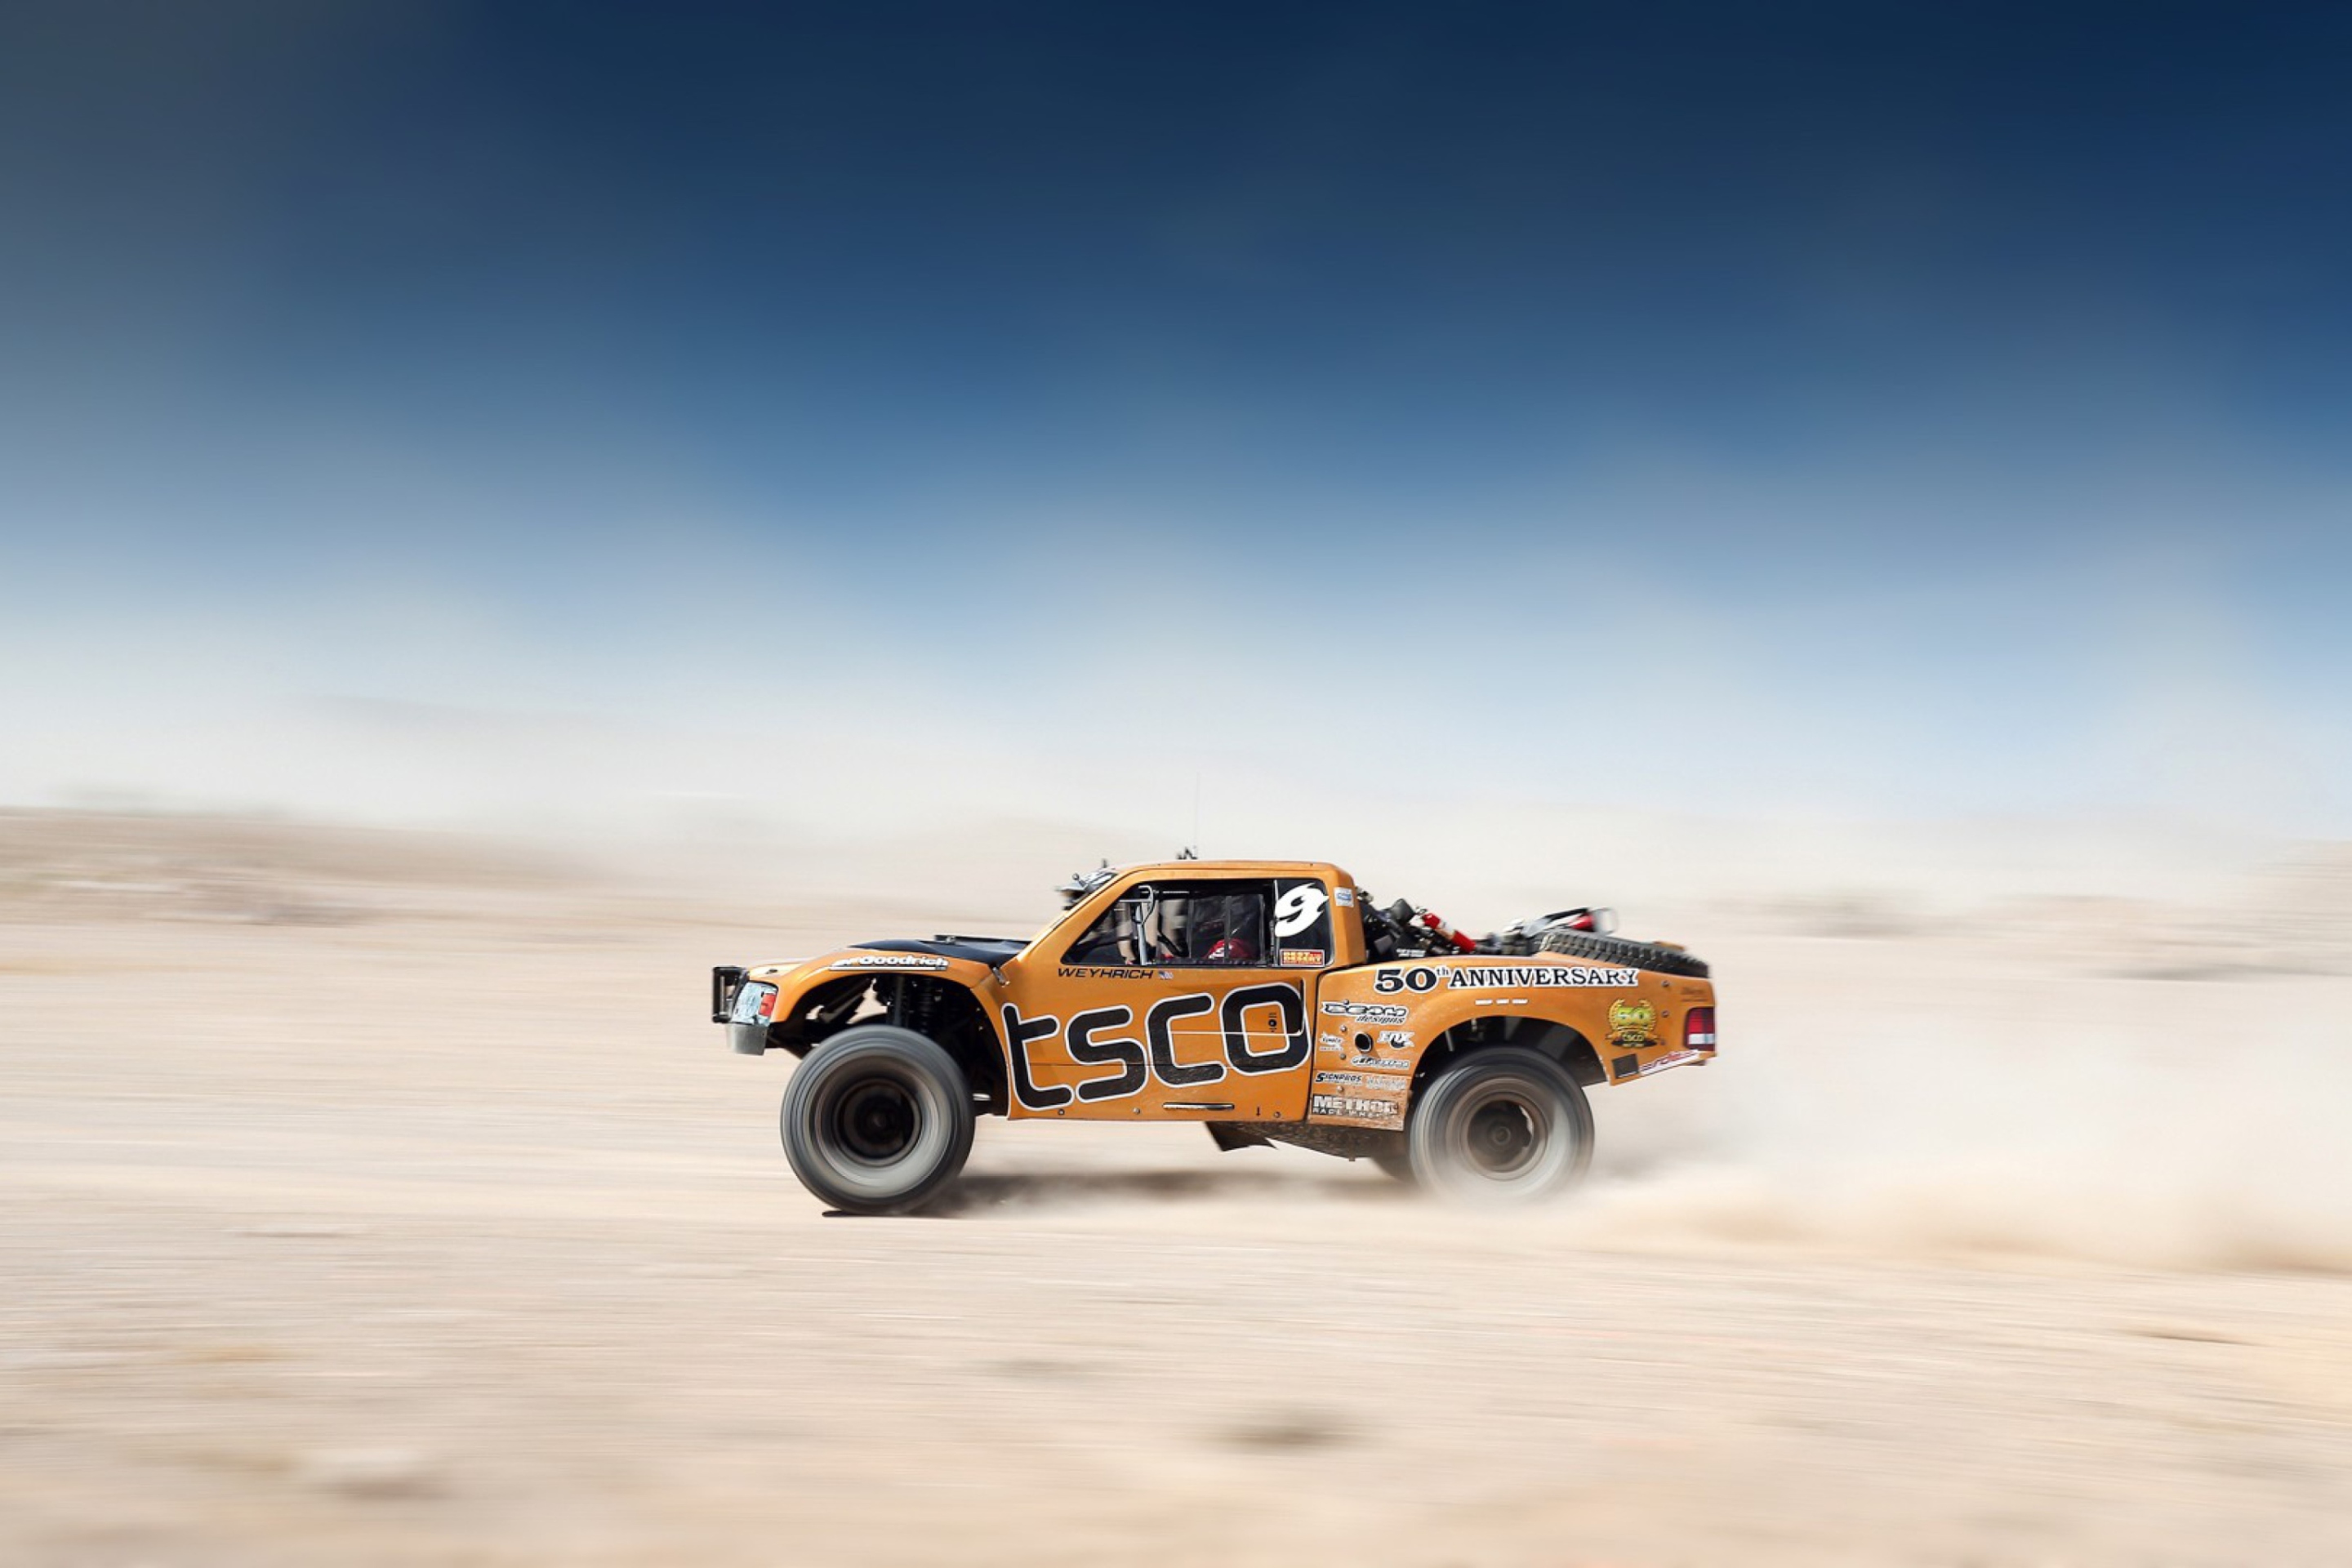 Off road карт. Dakar Desert Rally Ford f150. Ford f 150 Dakar Safari Rally. Внедорожник трофи трак. Ford f-150 Baja Trophy Truck.